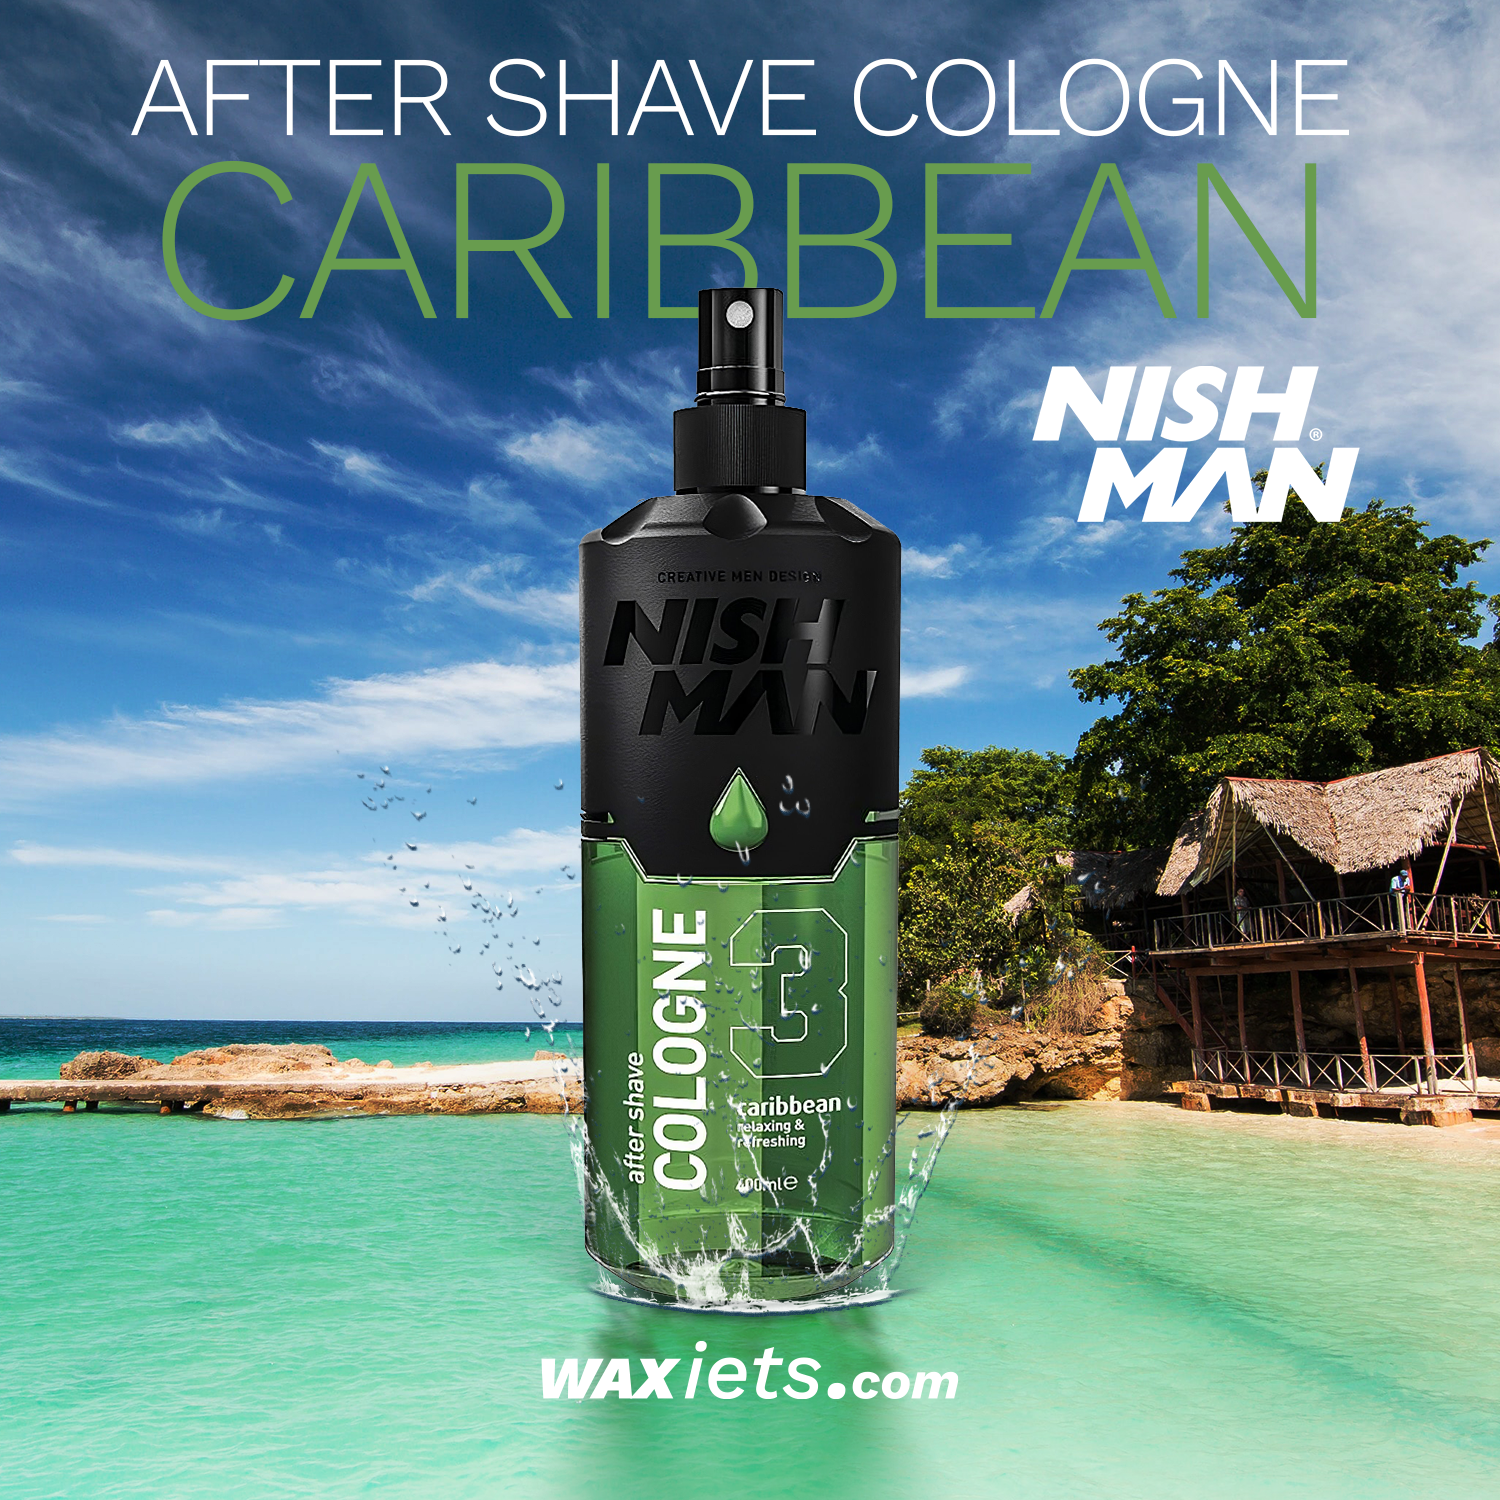 NISH MAN – After Shave Cologne Caribbean 3 – 400ml